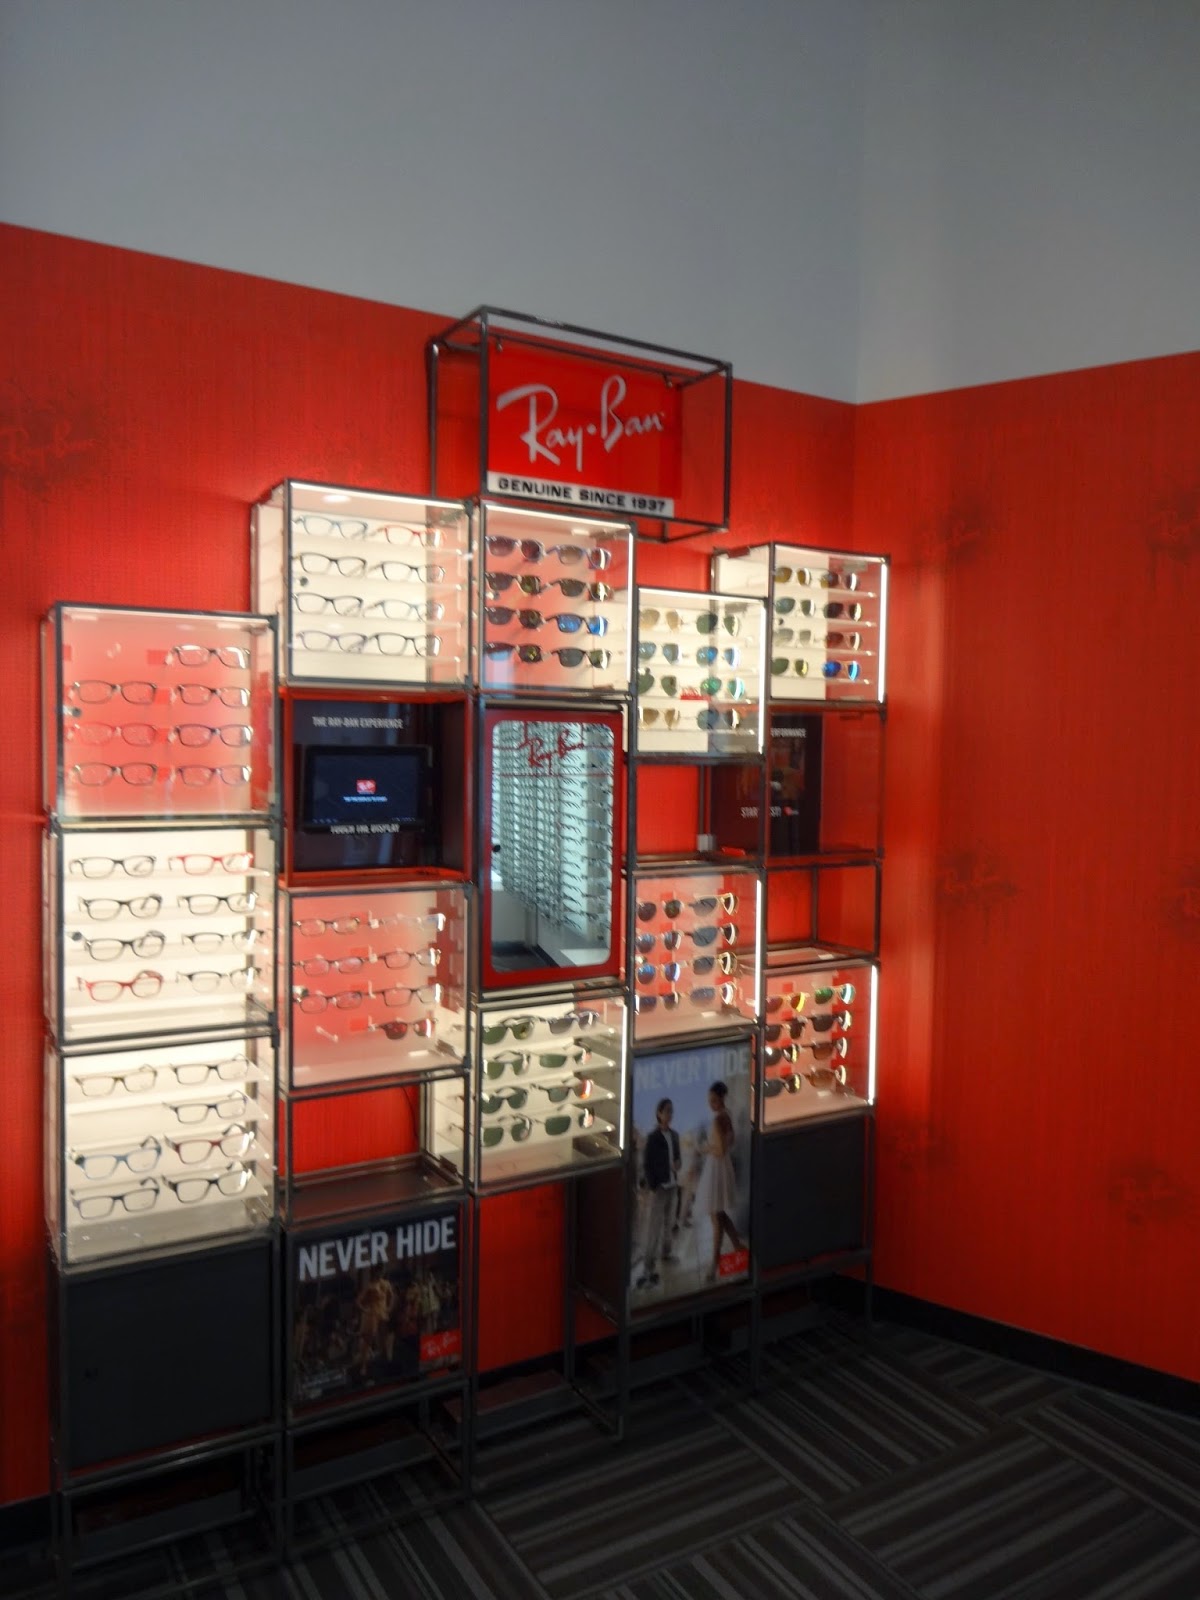 Photo of Metro Optics Eyewear in Bronx City, New York, United States - 4 Picture of Point of interest, Establishment, Store, Health